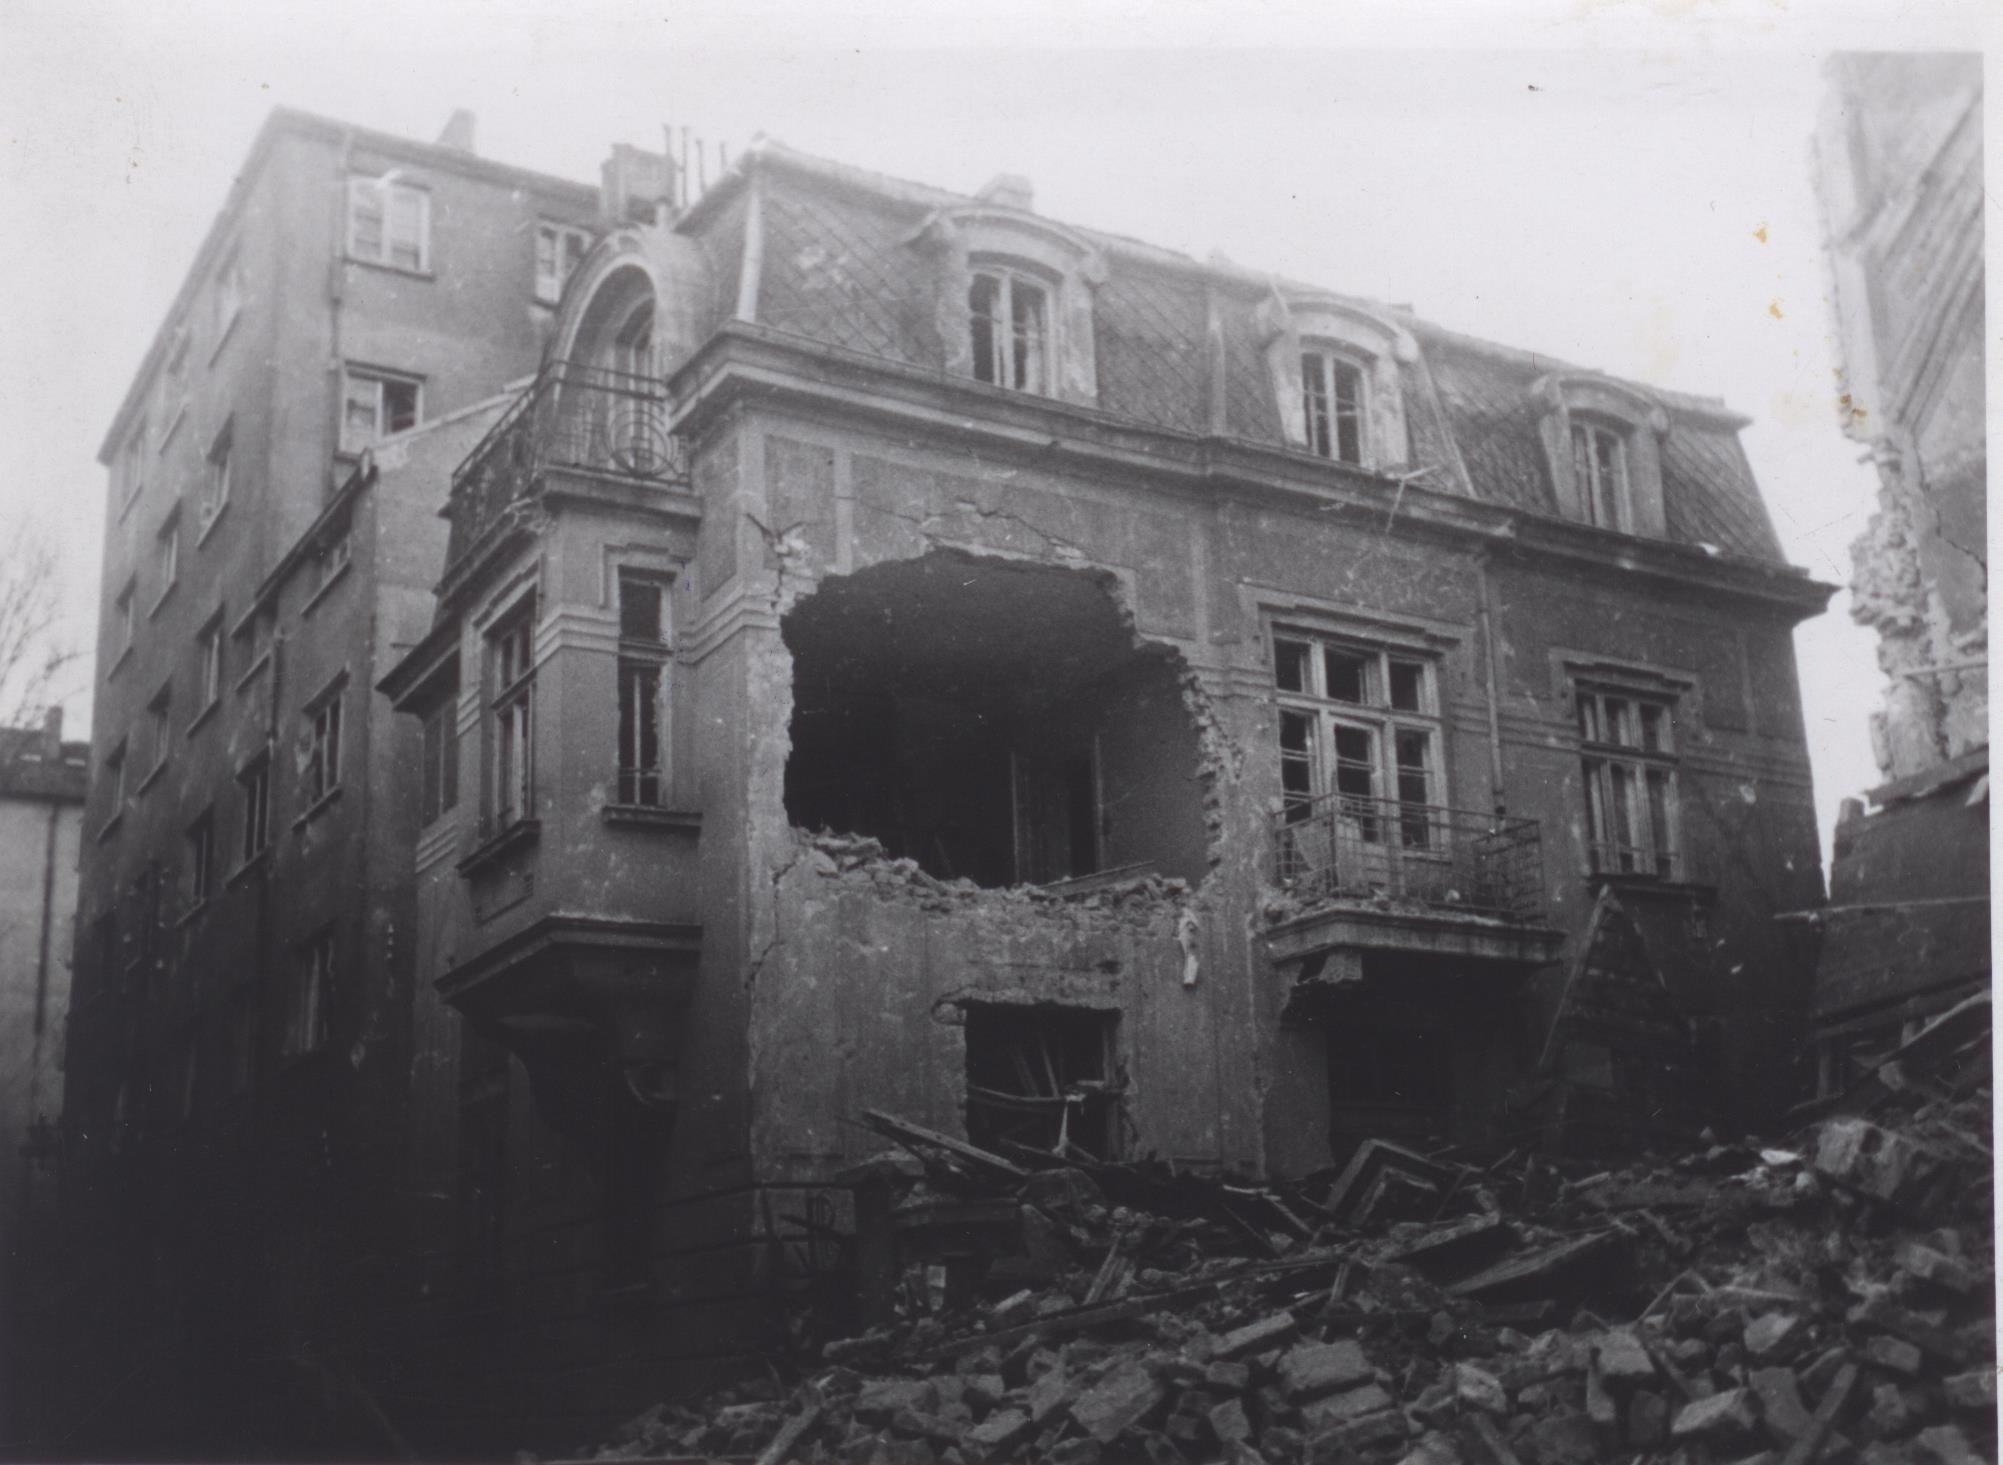 Sofia Bombings 1944: Damaged building on Ferdinand Blvd.